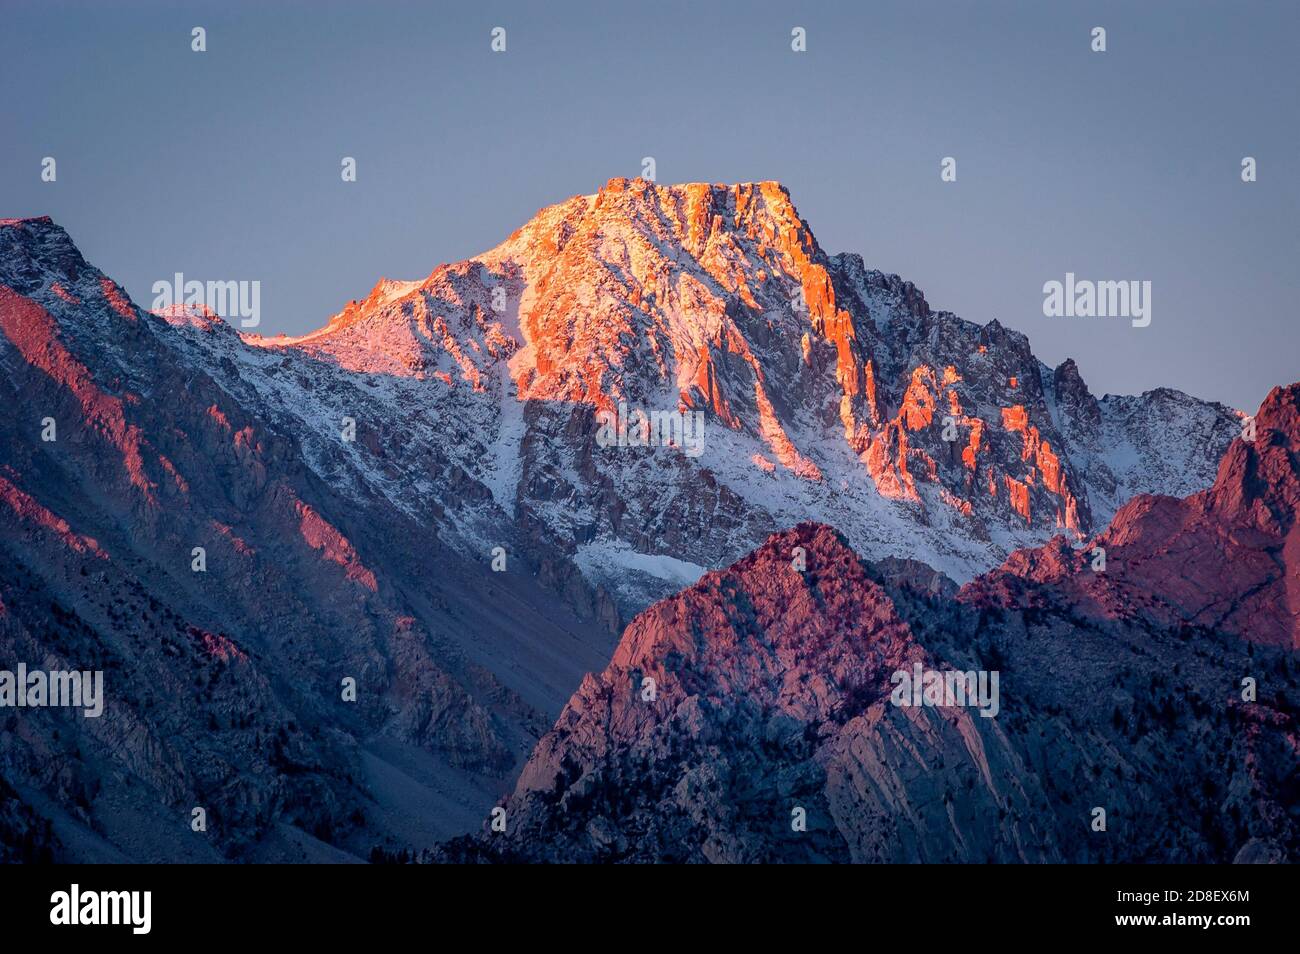 Sunrise on a rocky peak in the Sierra Nevada Mountains. Stock Photo